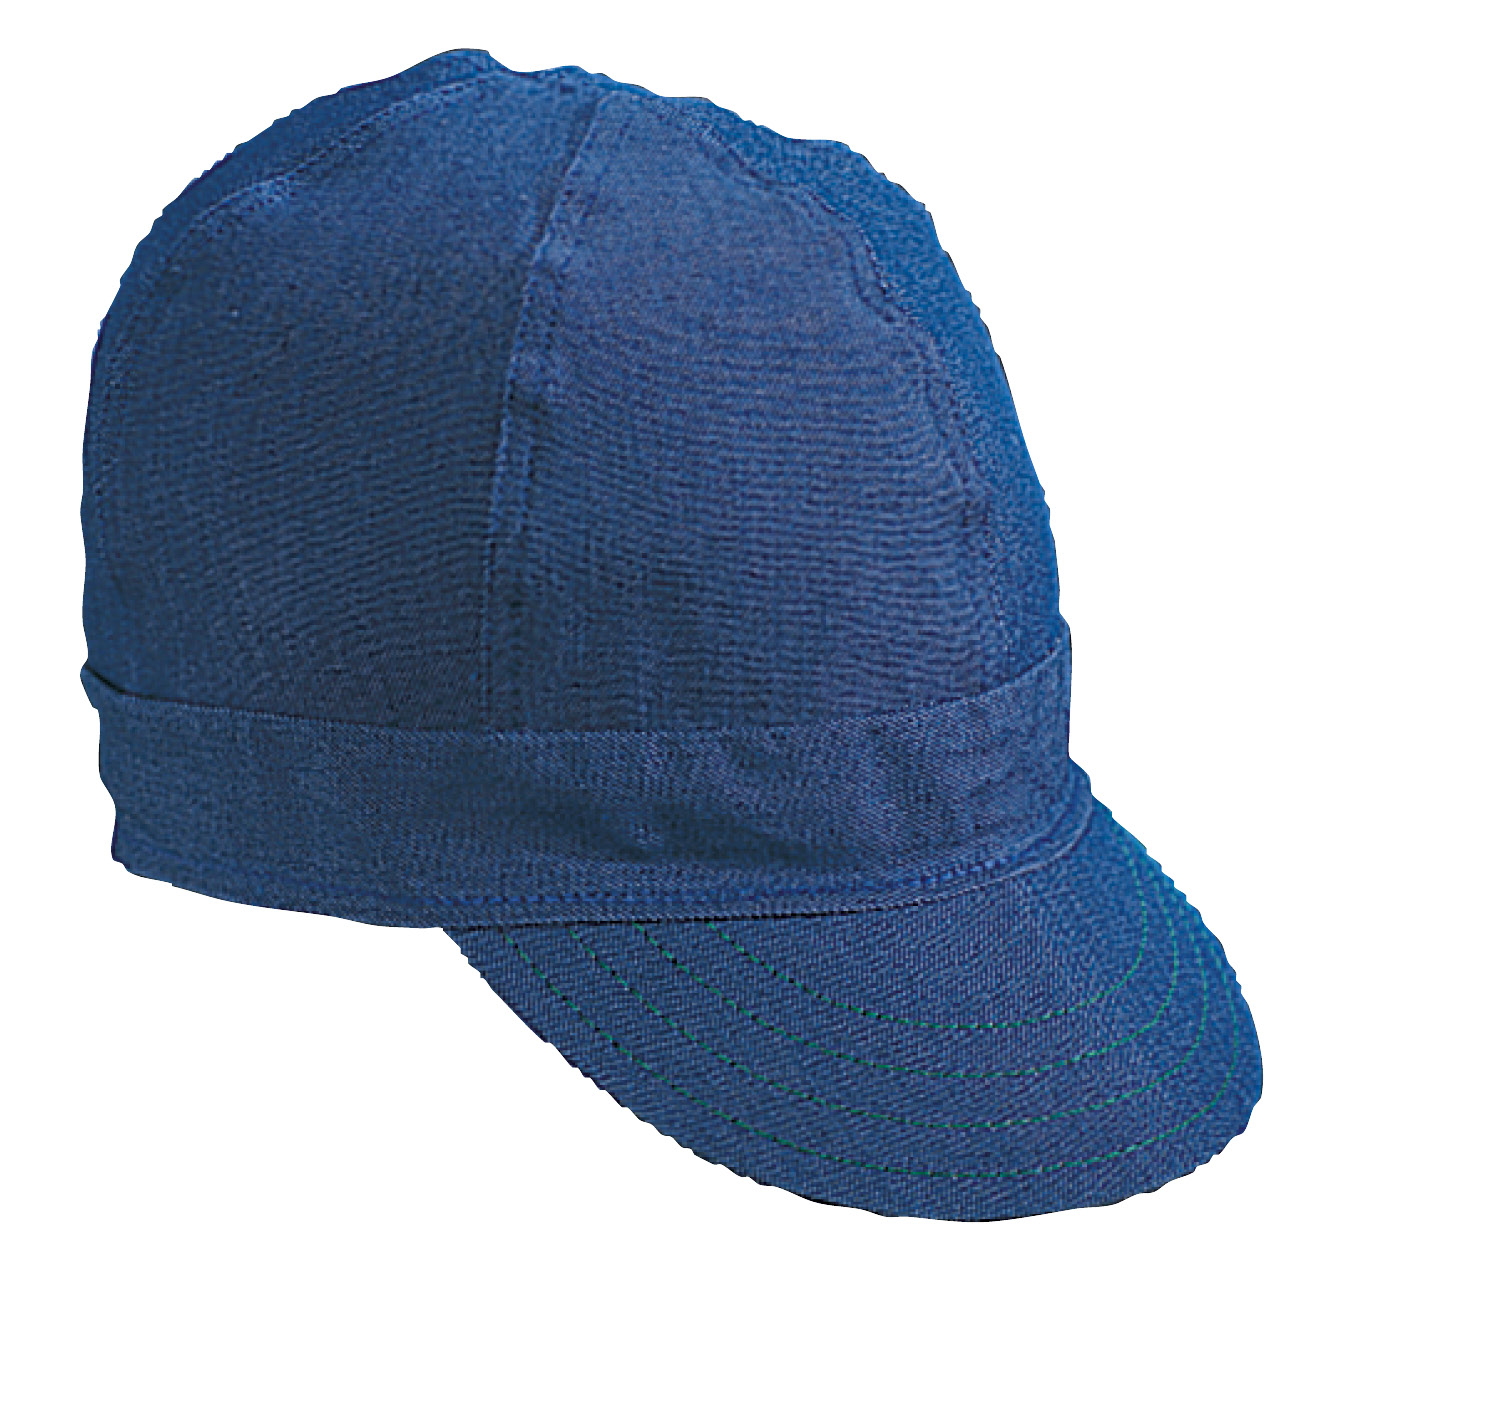 Kromer Blue Denim Style Welder Cap, Cotton, Length 5", Width 6"